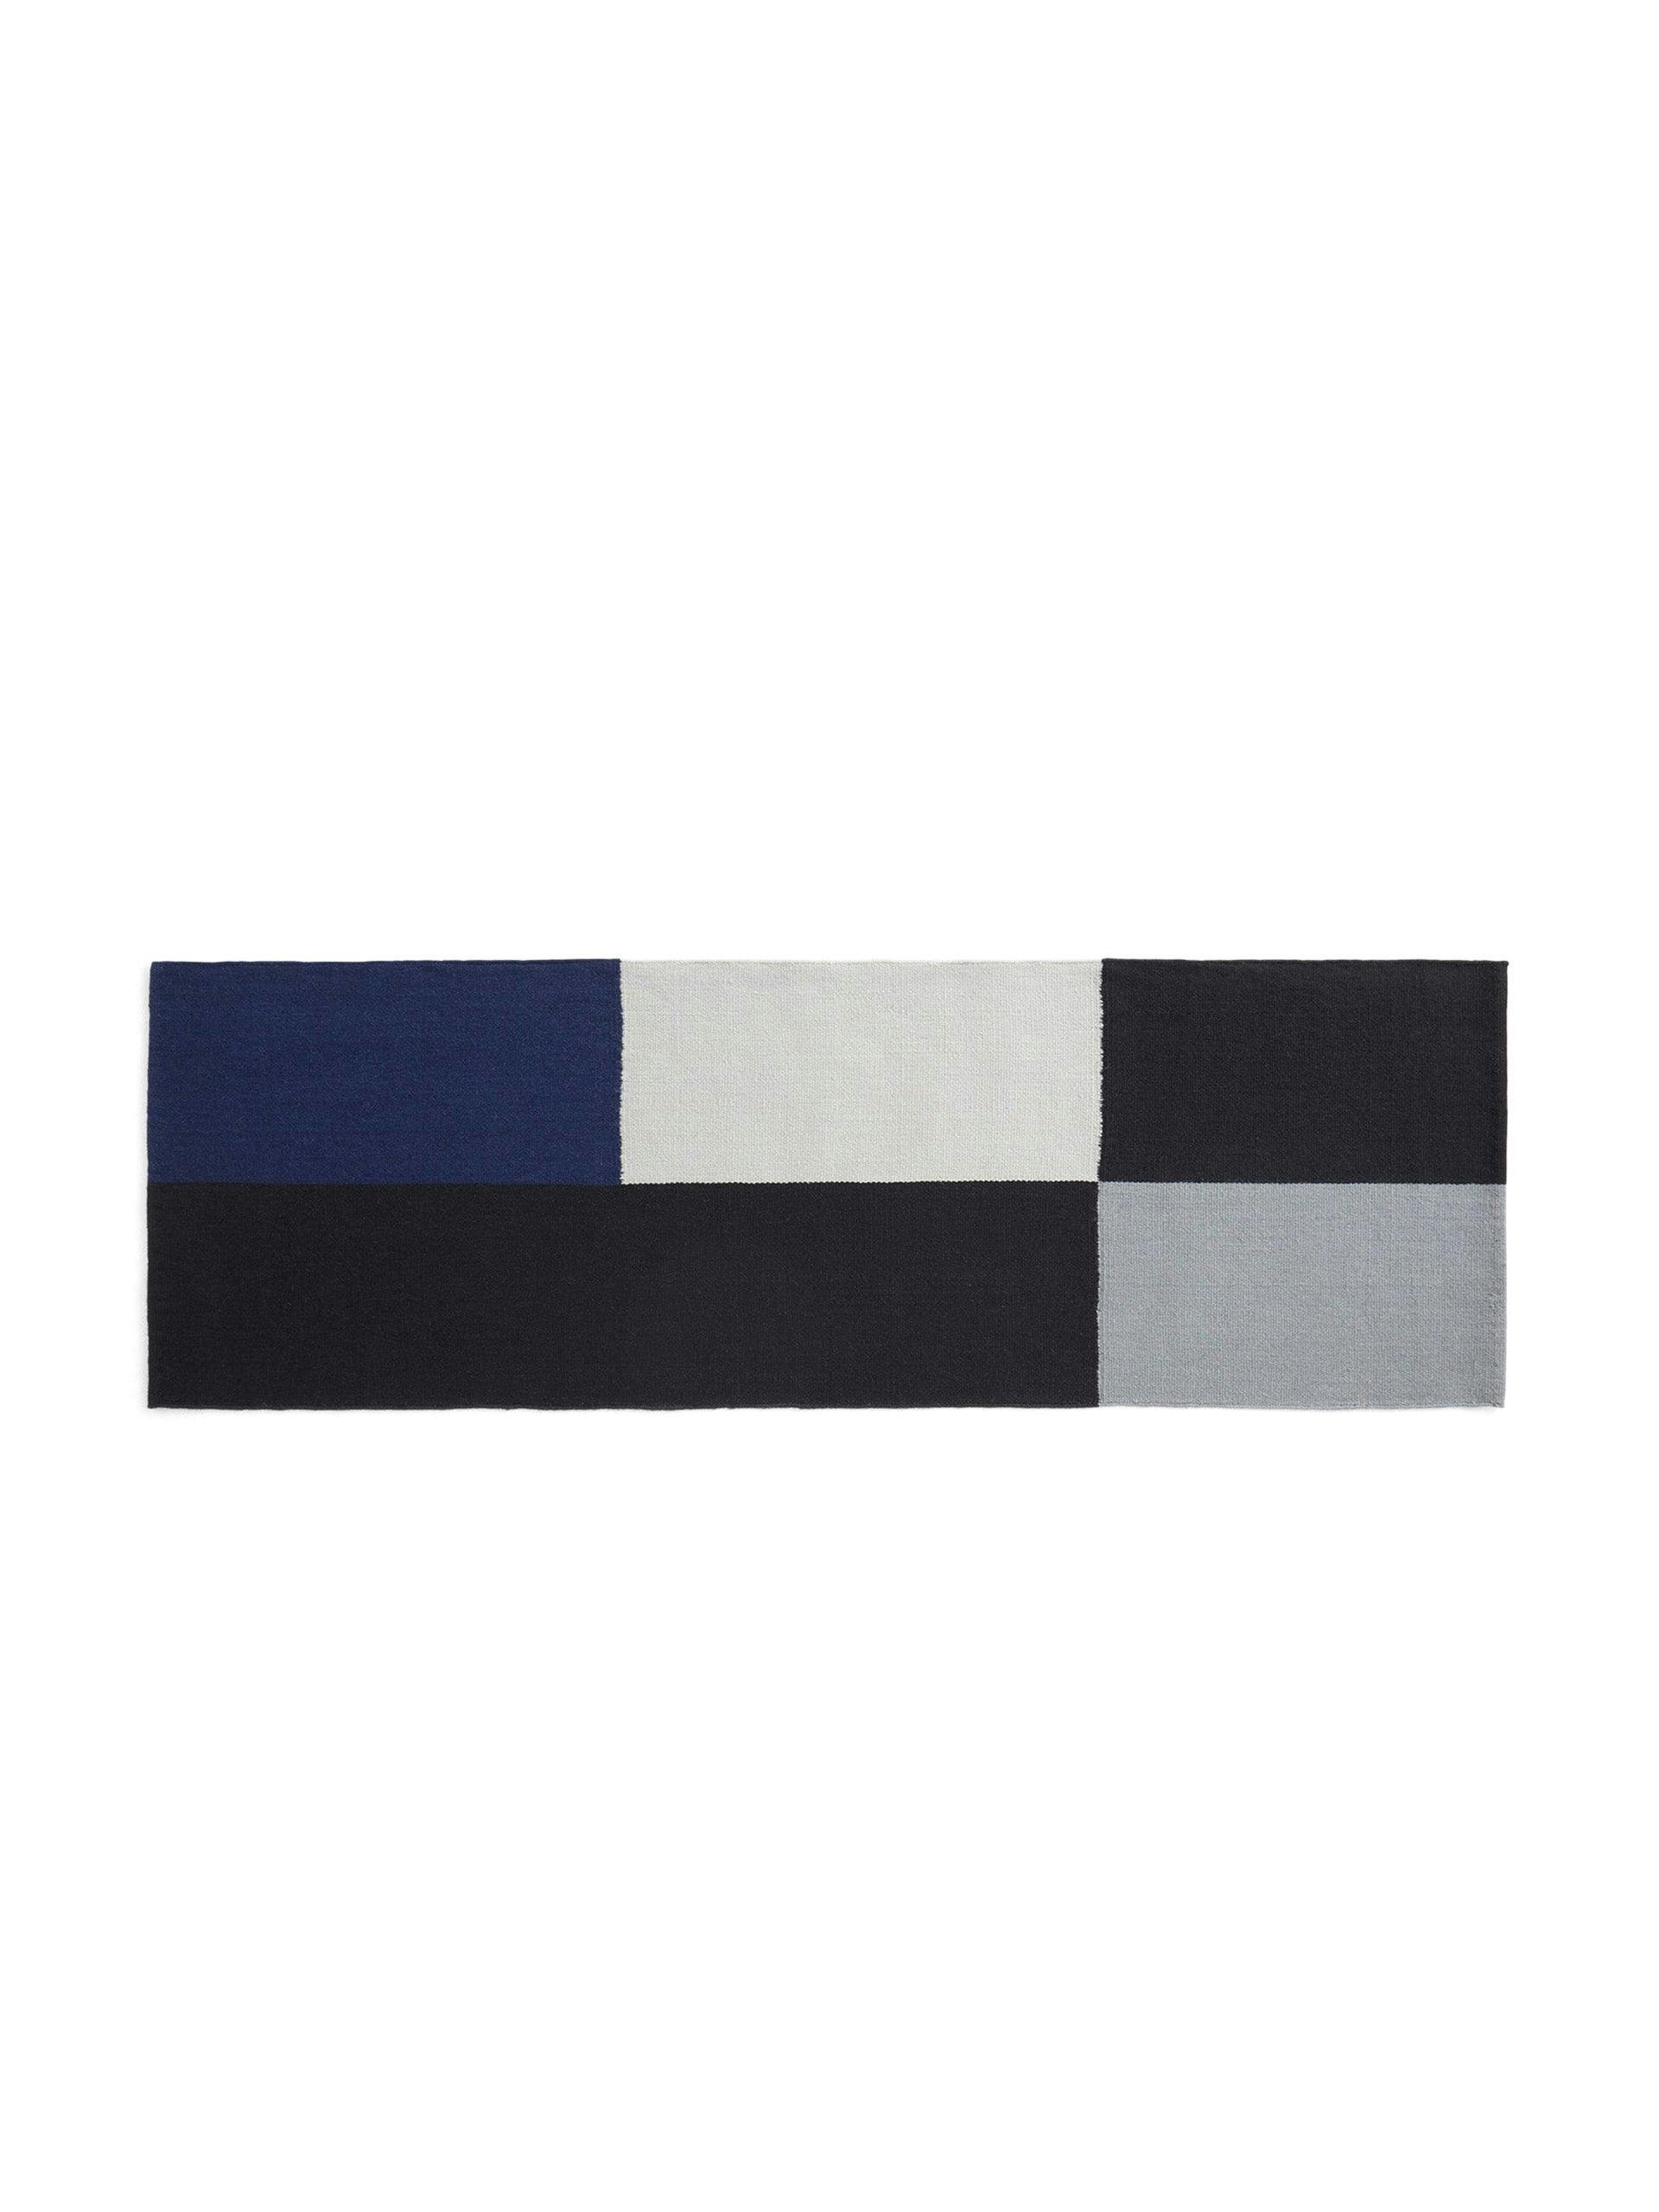 Geometric abstract flat works rug